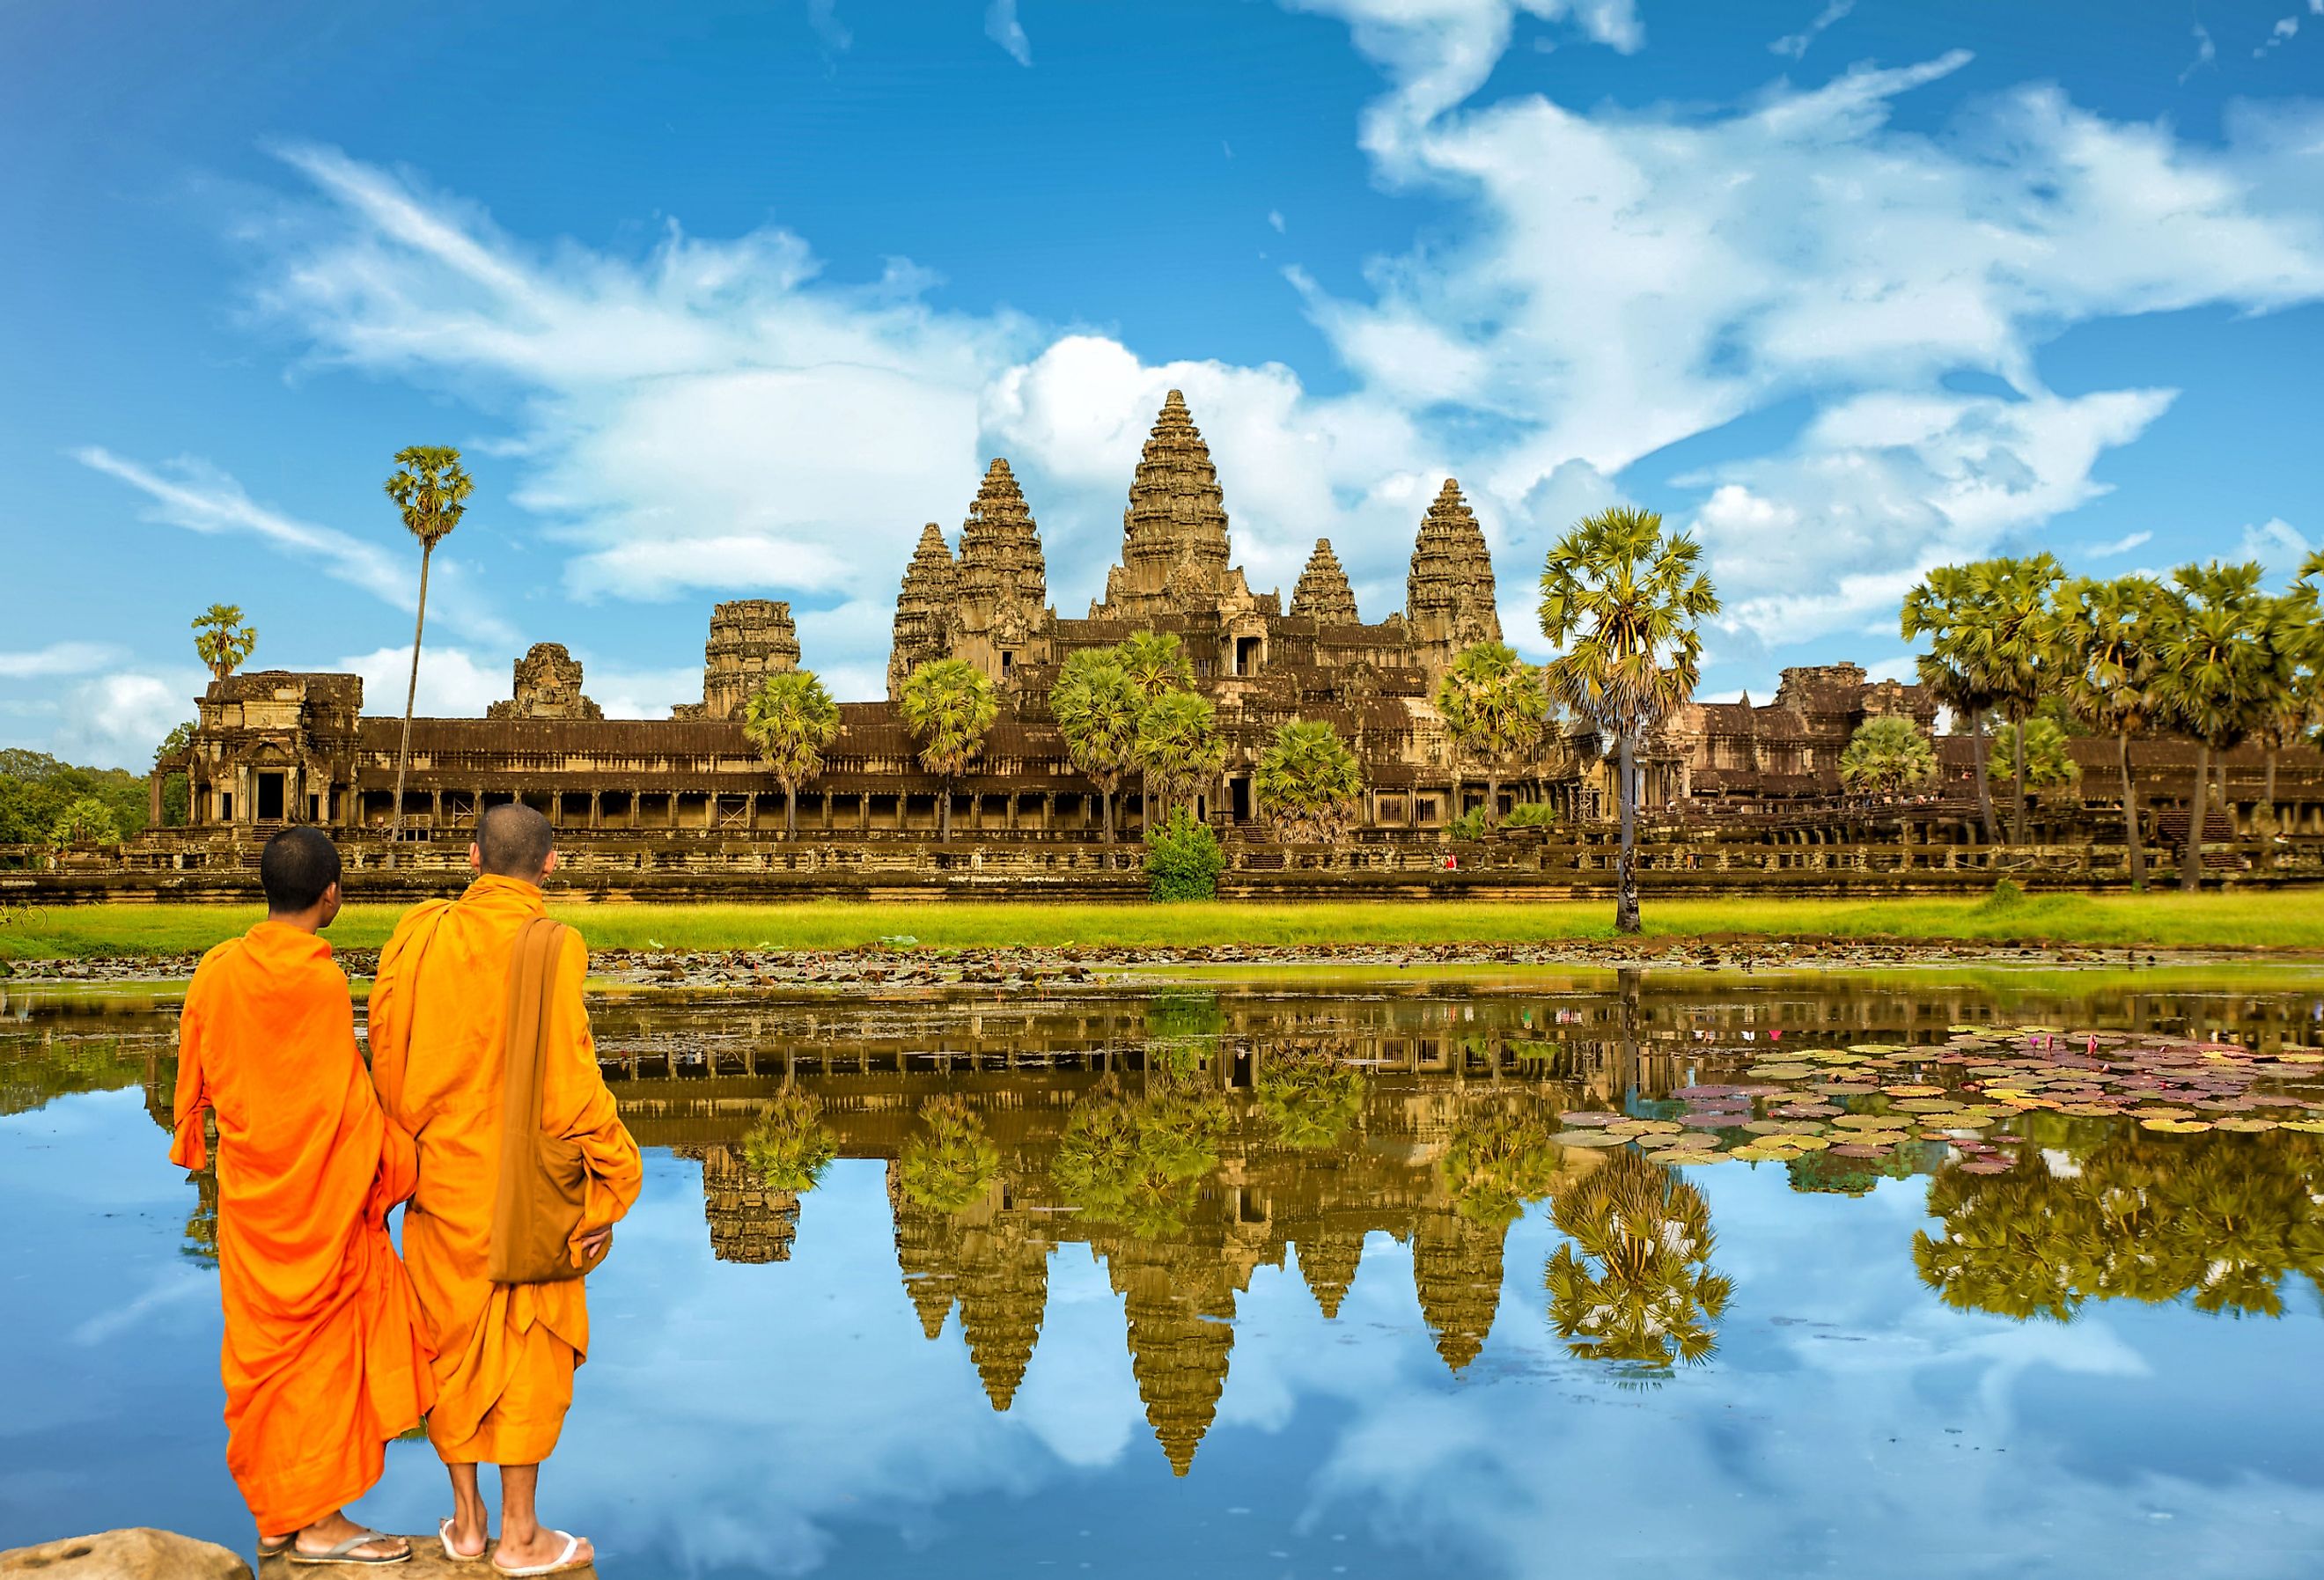 The temple complex of Angkor Wat in Cambodia. Image credit Sakdawut Tangtongsap via Shutterstock 